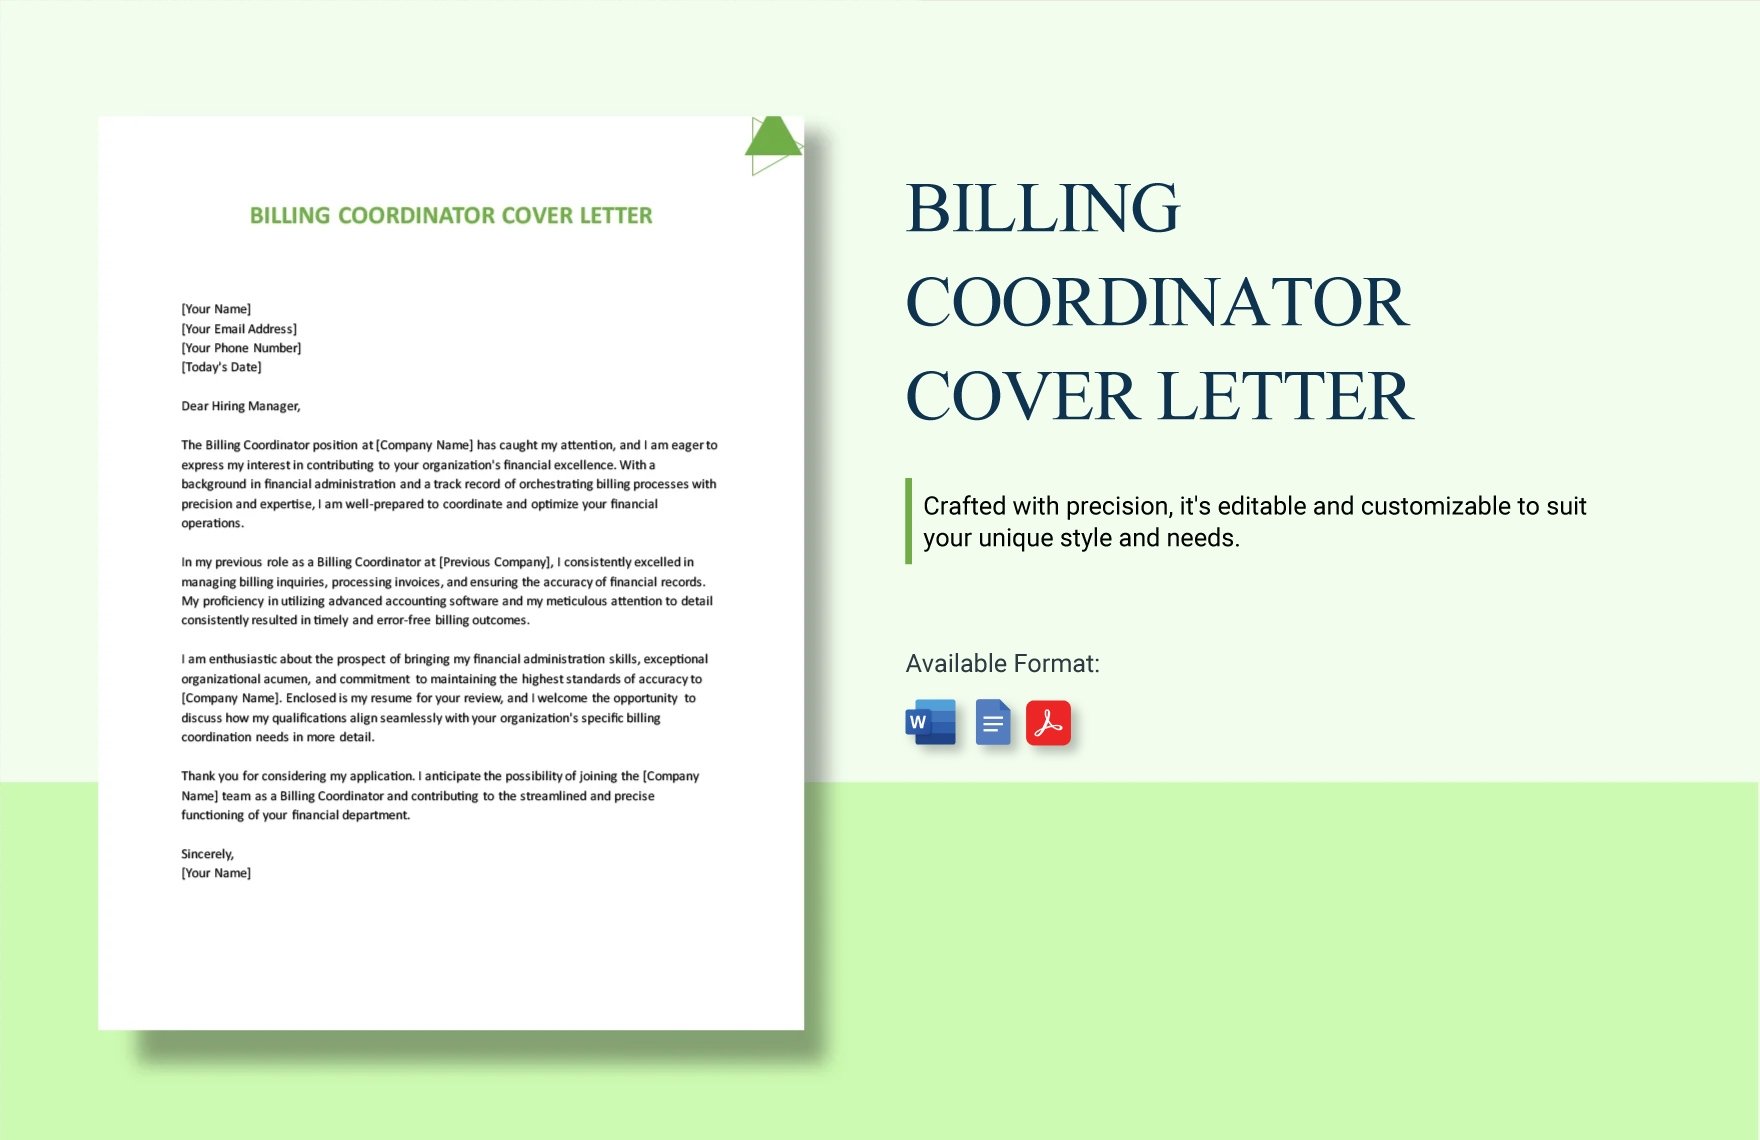 Billing Coordinator Cover Letter in Word, Google Docs, PDF